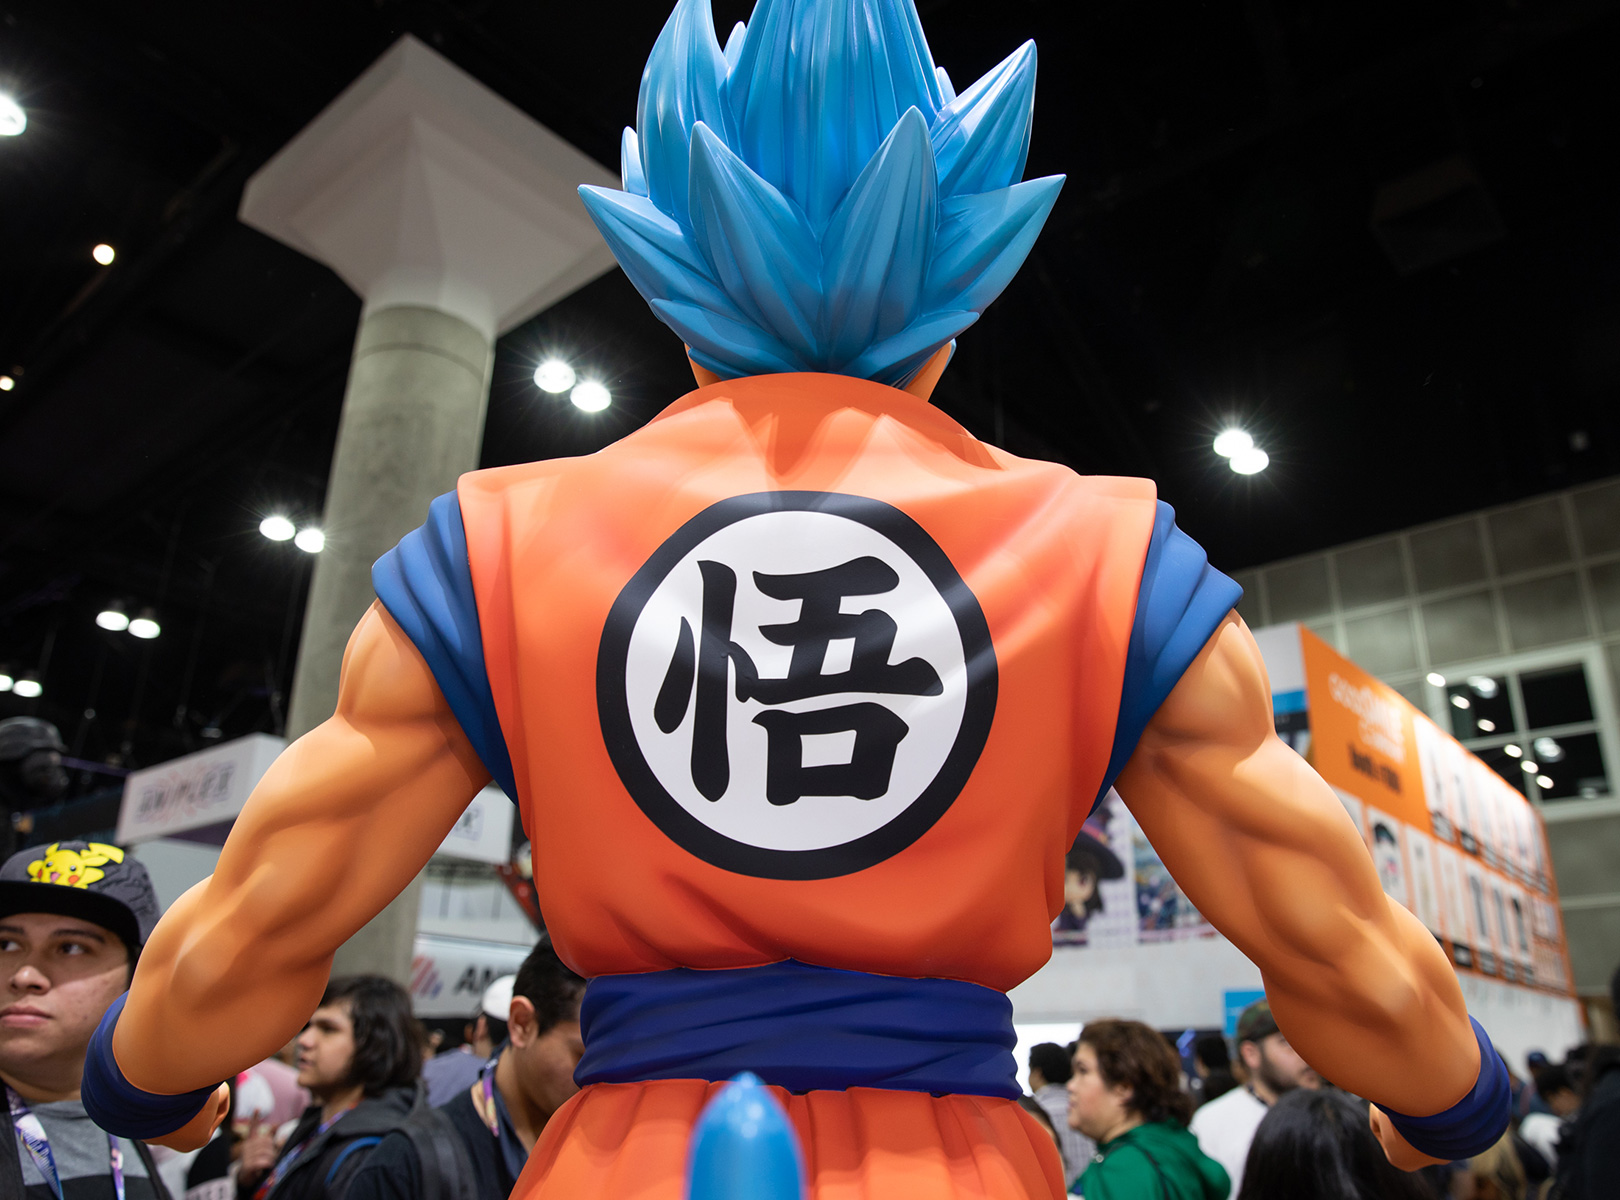 Dragon Ball Z: Battle of Gods Returns to U.S. Theaters for 10th Anniversary  - Crunchyroll News